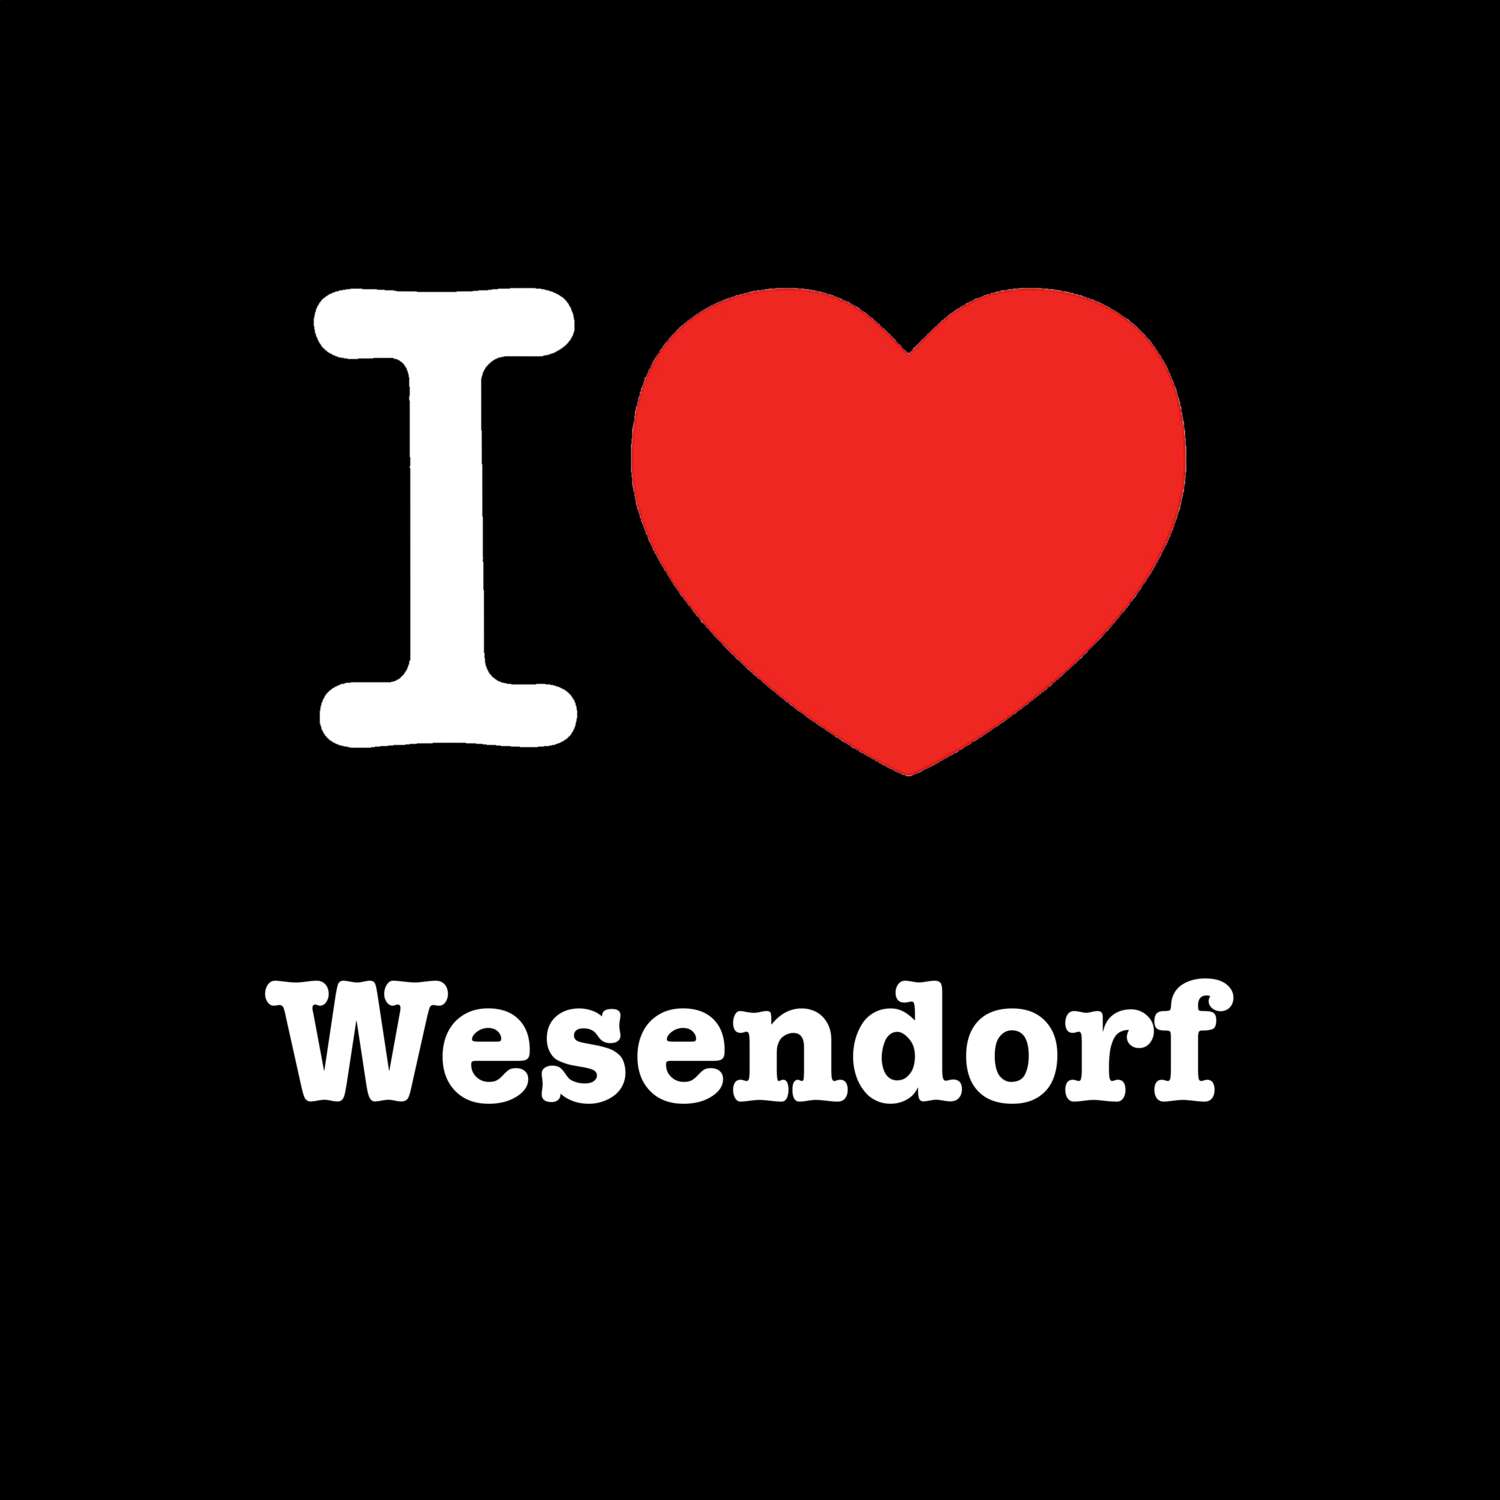 Wesendorf T-Shirt »I love«